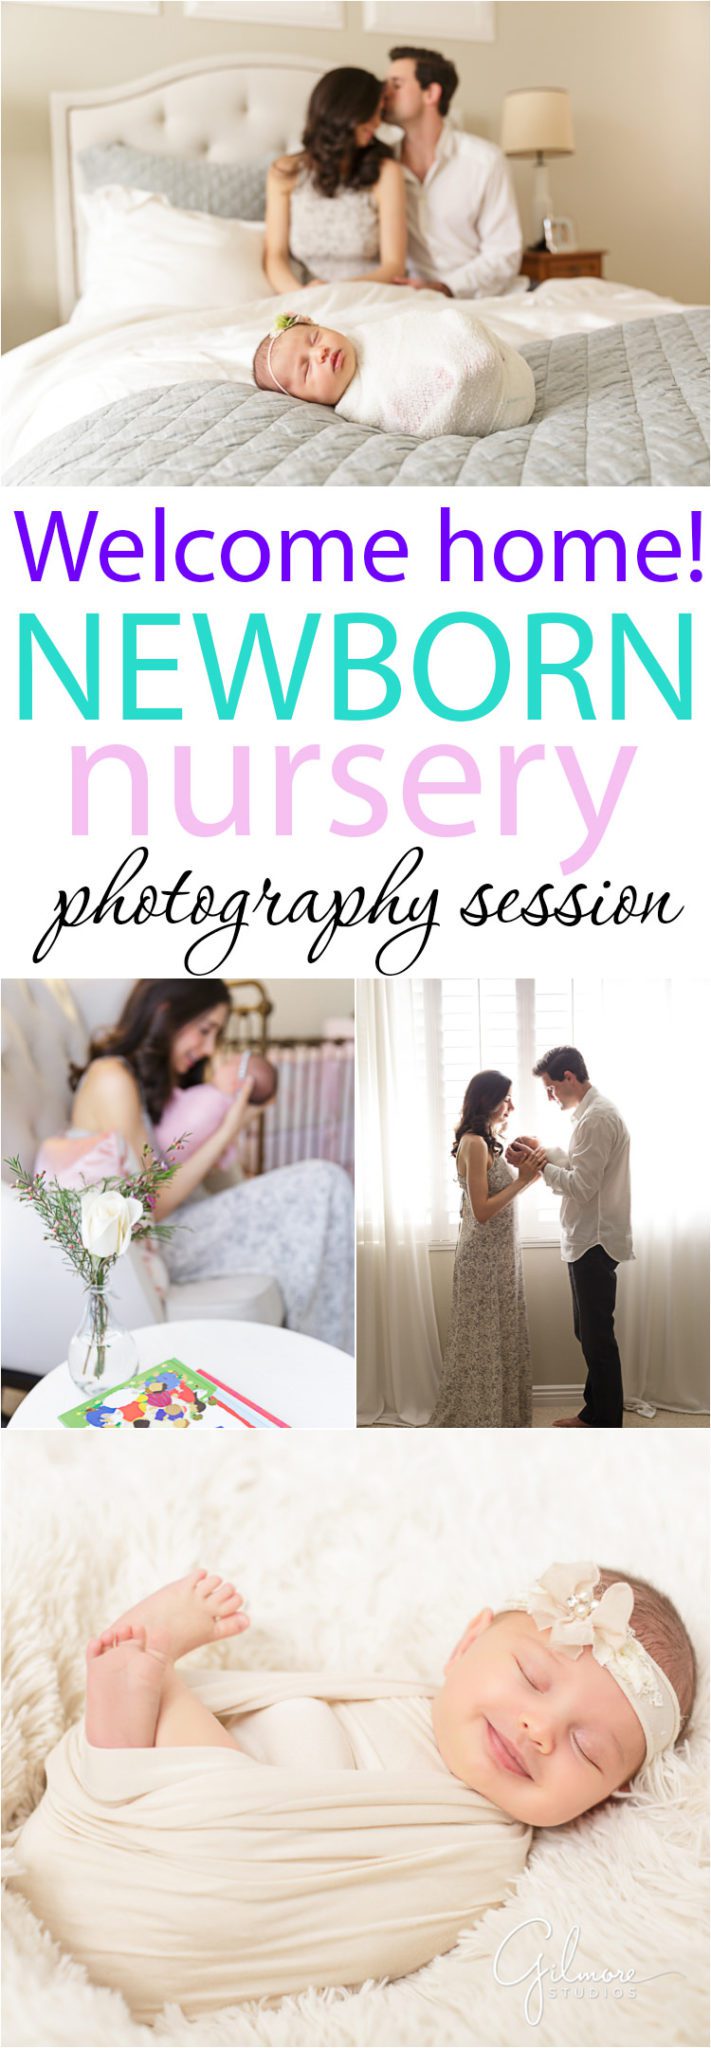 Lifestyle newborn photographer Newport Beach